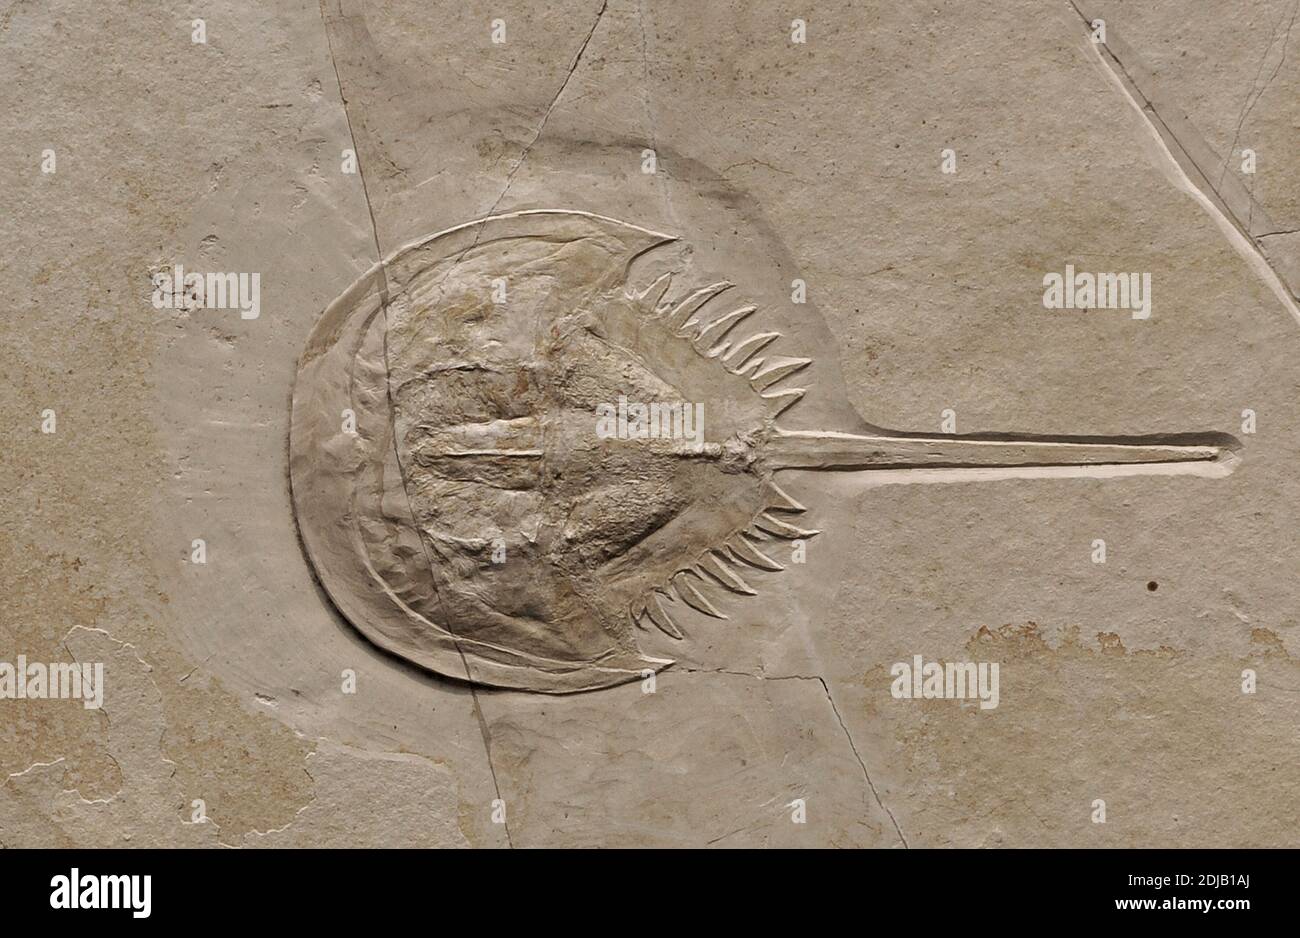 Mesolimulus. Extinct genus of arthropod. Example of Solnhofen limestone, near Solnhofen, Bavaria, Germany. Late Jurassic. 150 million years ago. Natural History Museum, Berlin. Germany. Stock Photo